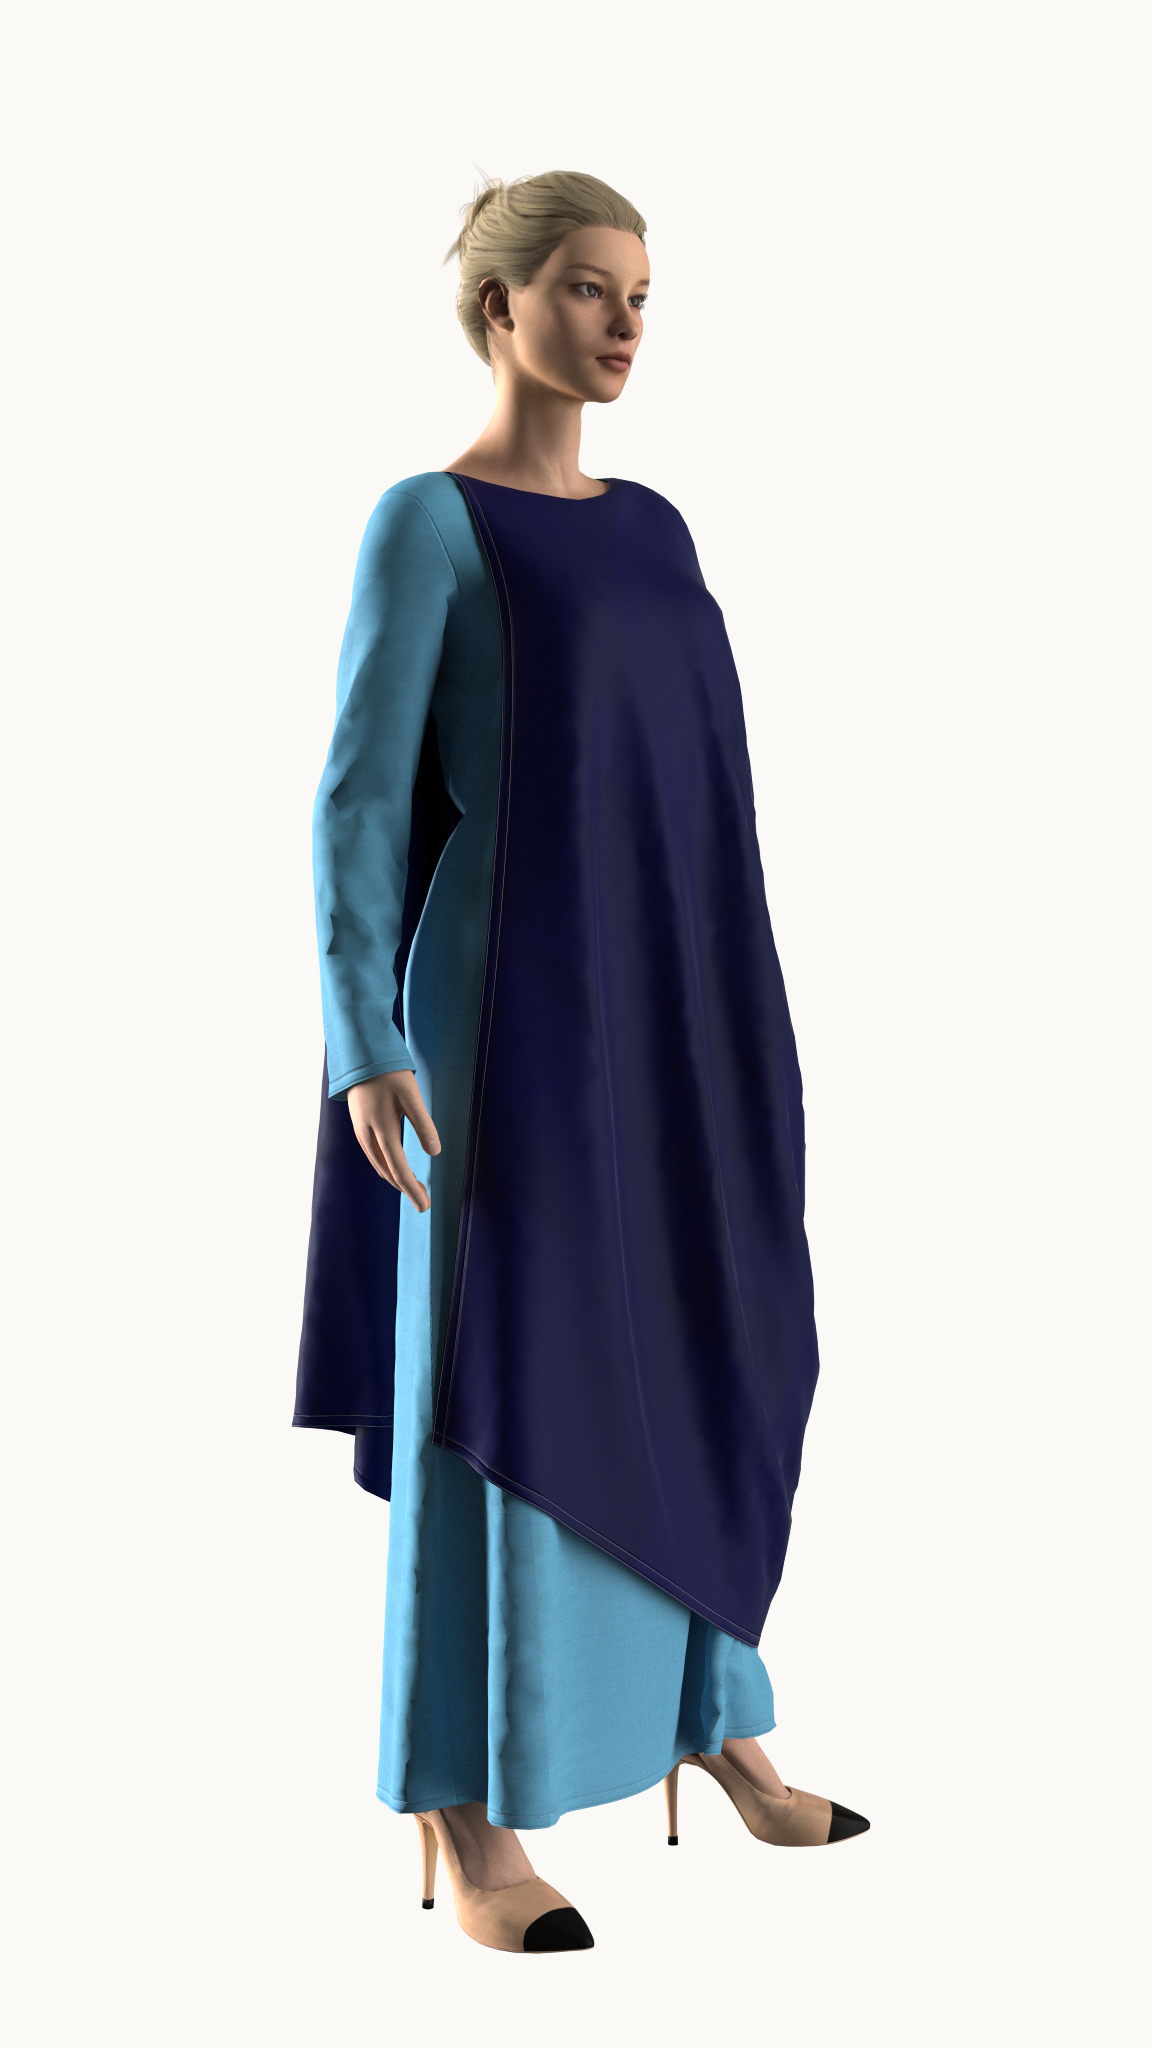 Full sleeve maxi dress  with drape design